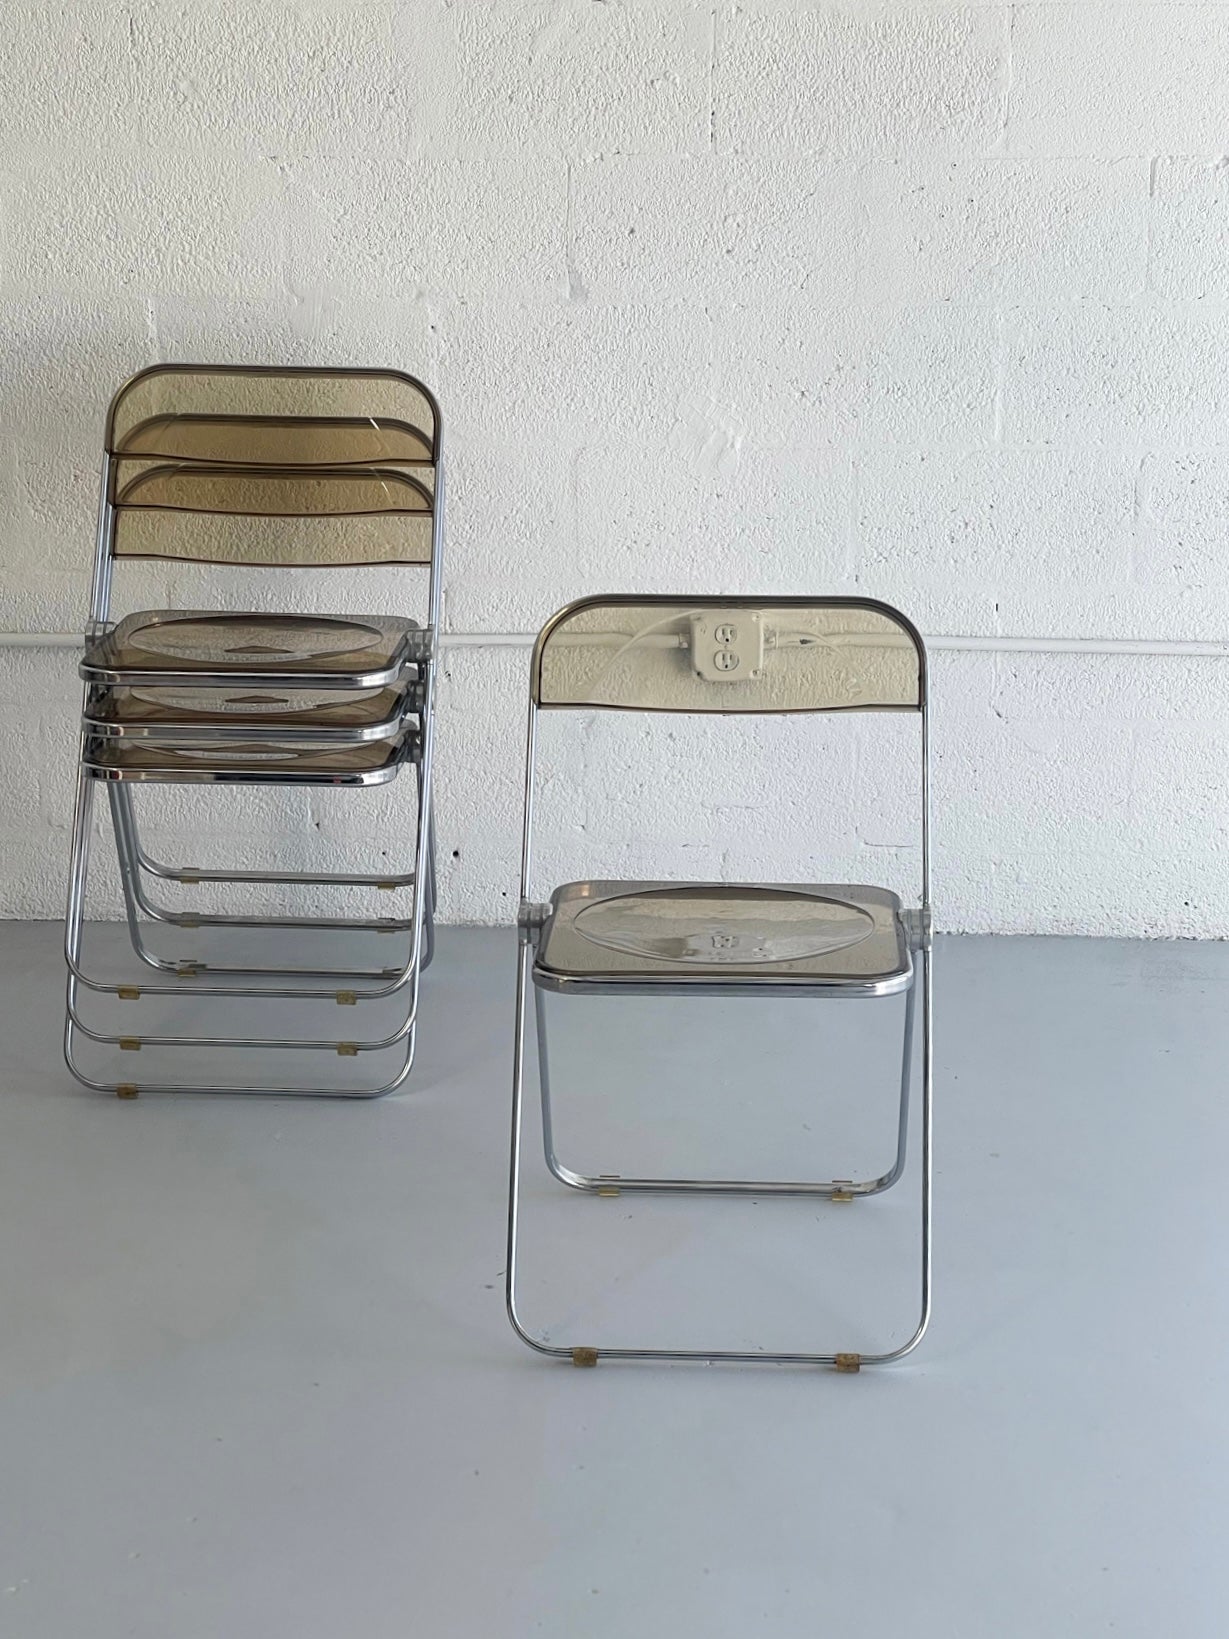 Set of 4 Smoked Lucite 'Plia' Chairs by Giancarlo Piretti for Anonima Castelli, 1967